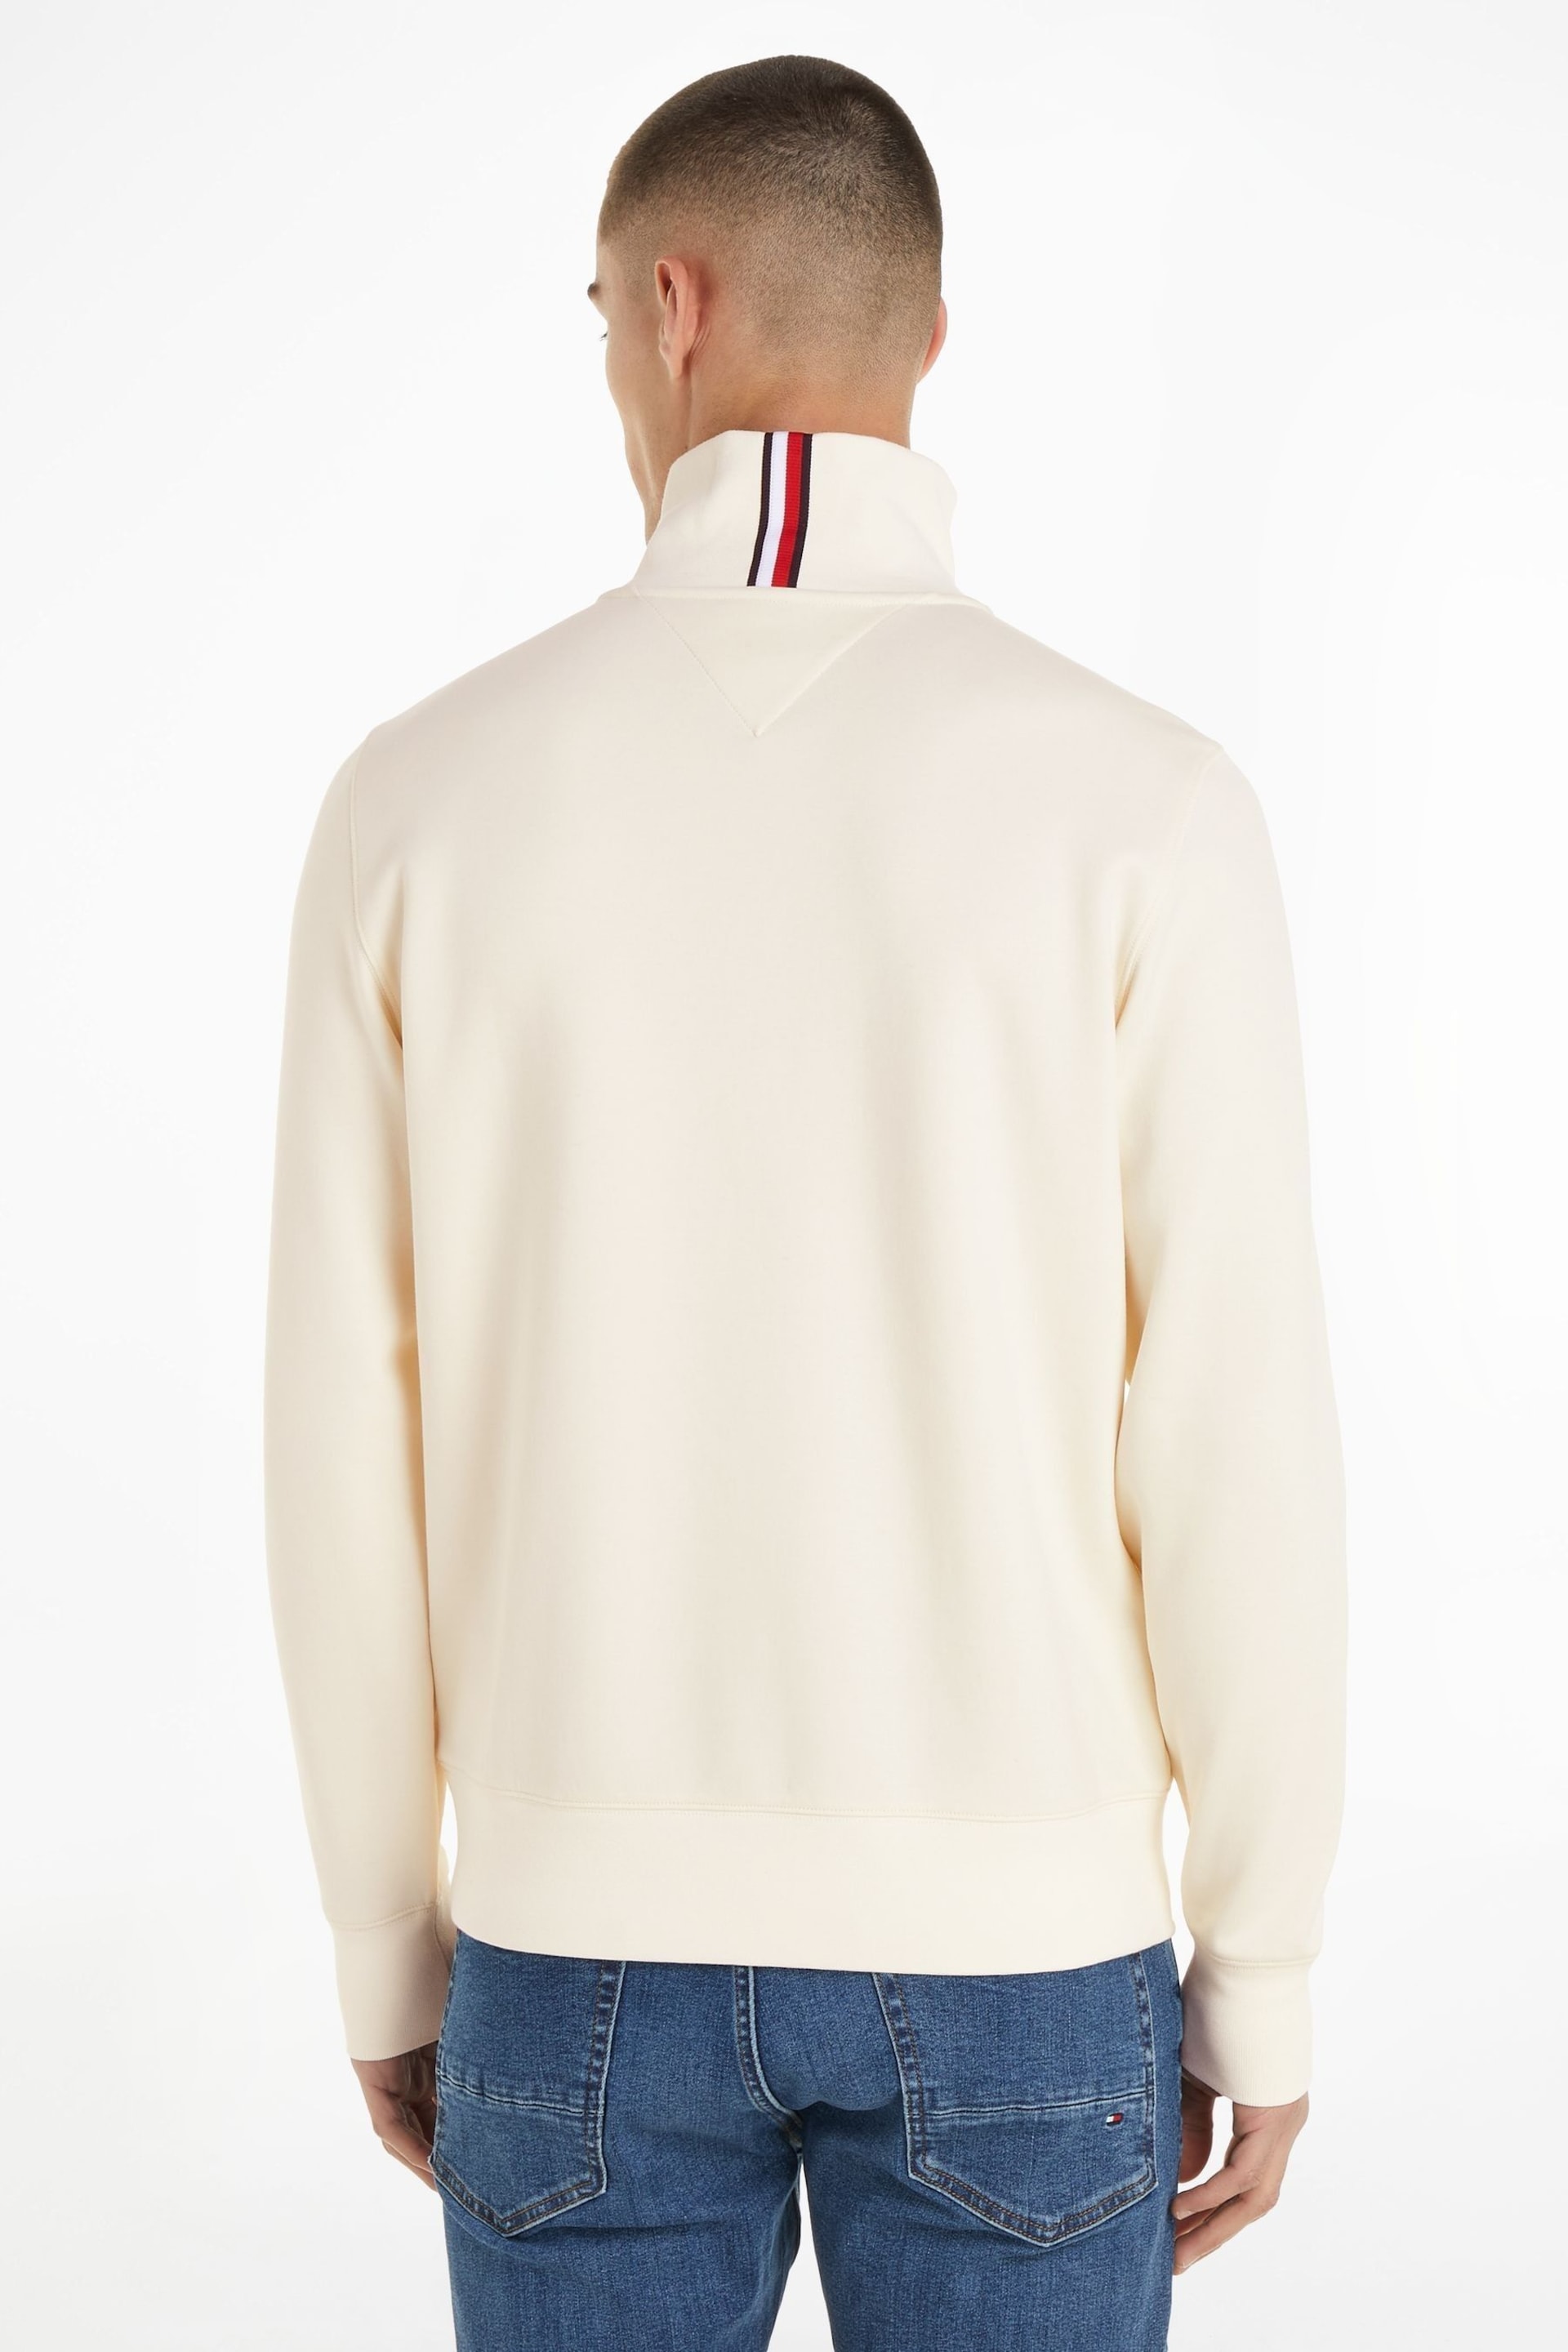 Tommy Hilfiger Monogram Cream Sweatshirt - Image 2 of 6